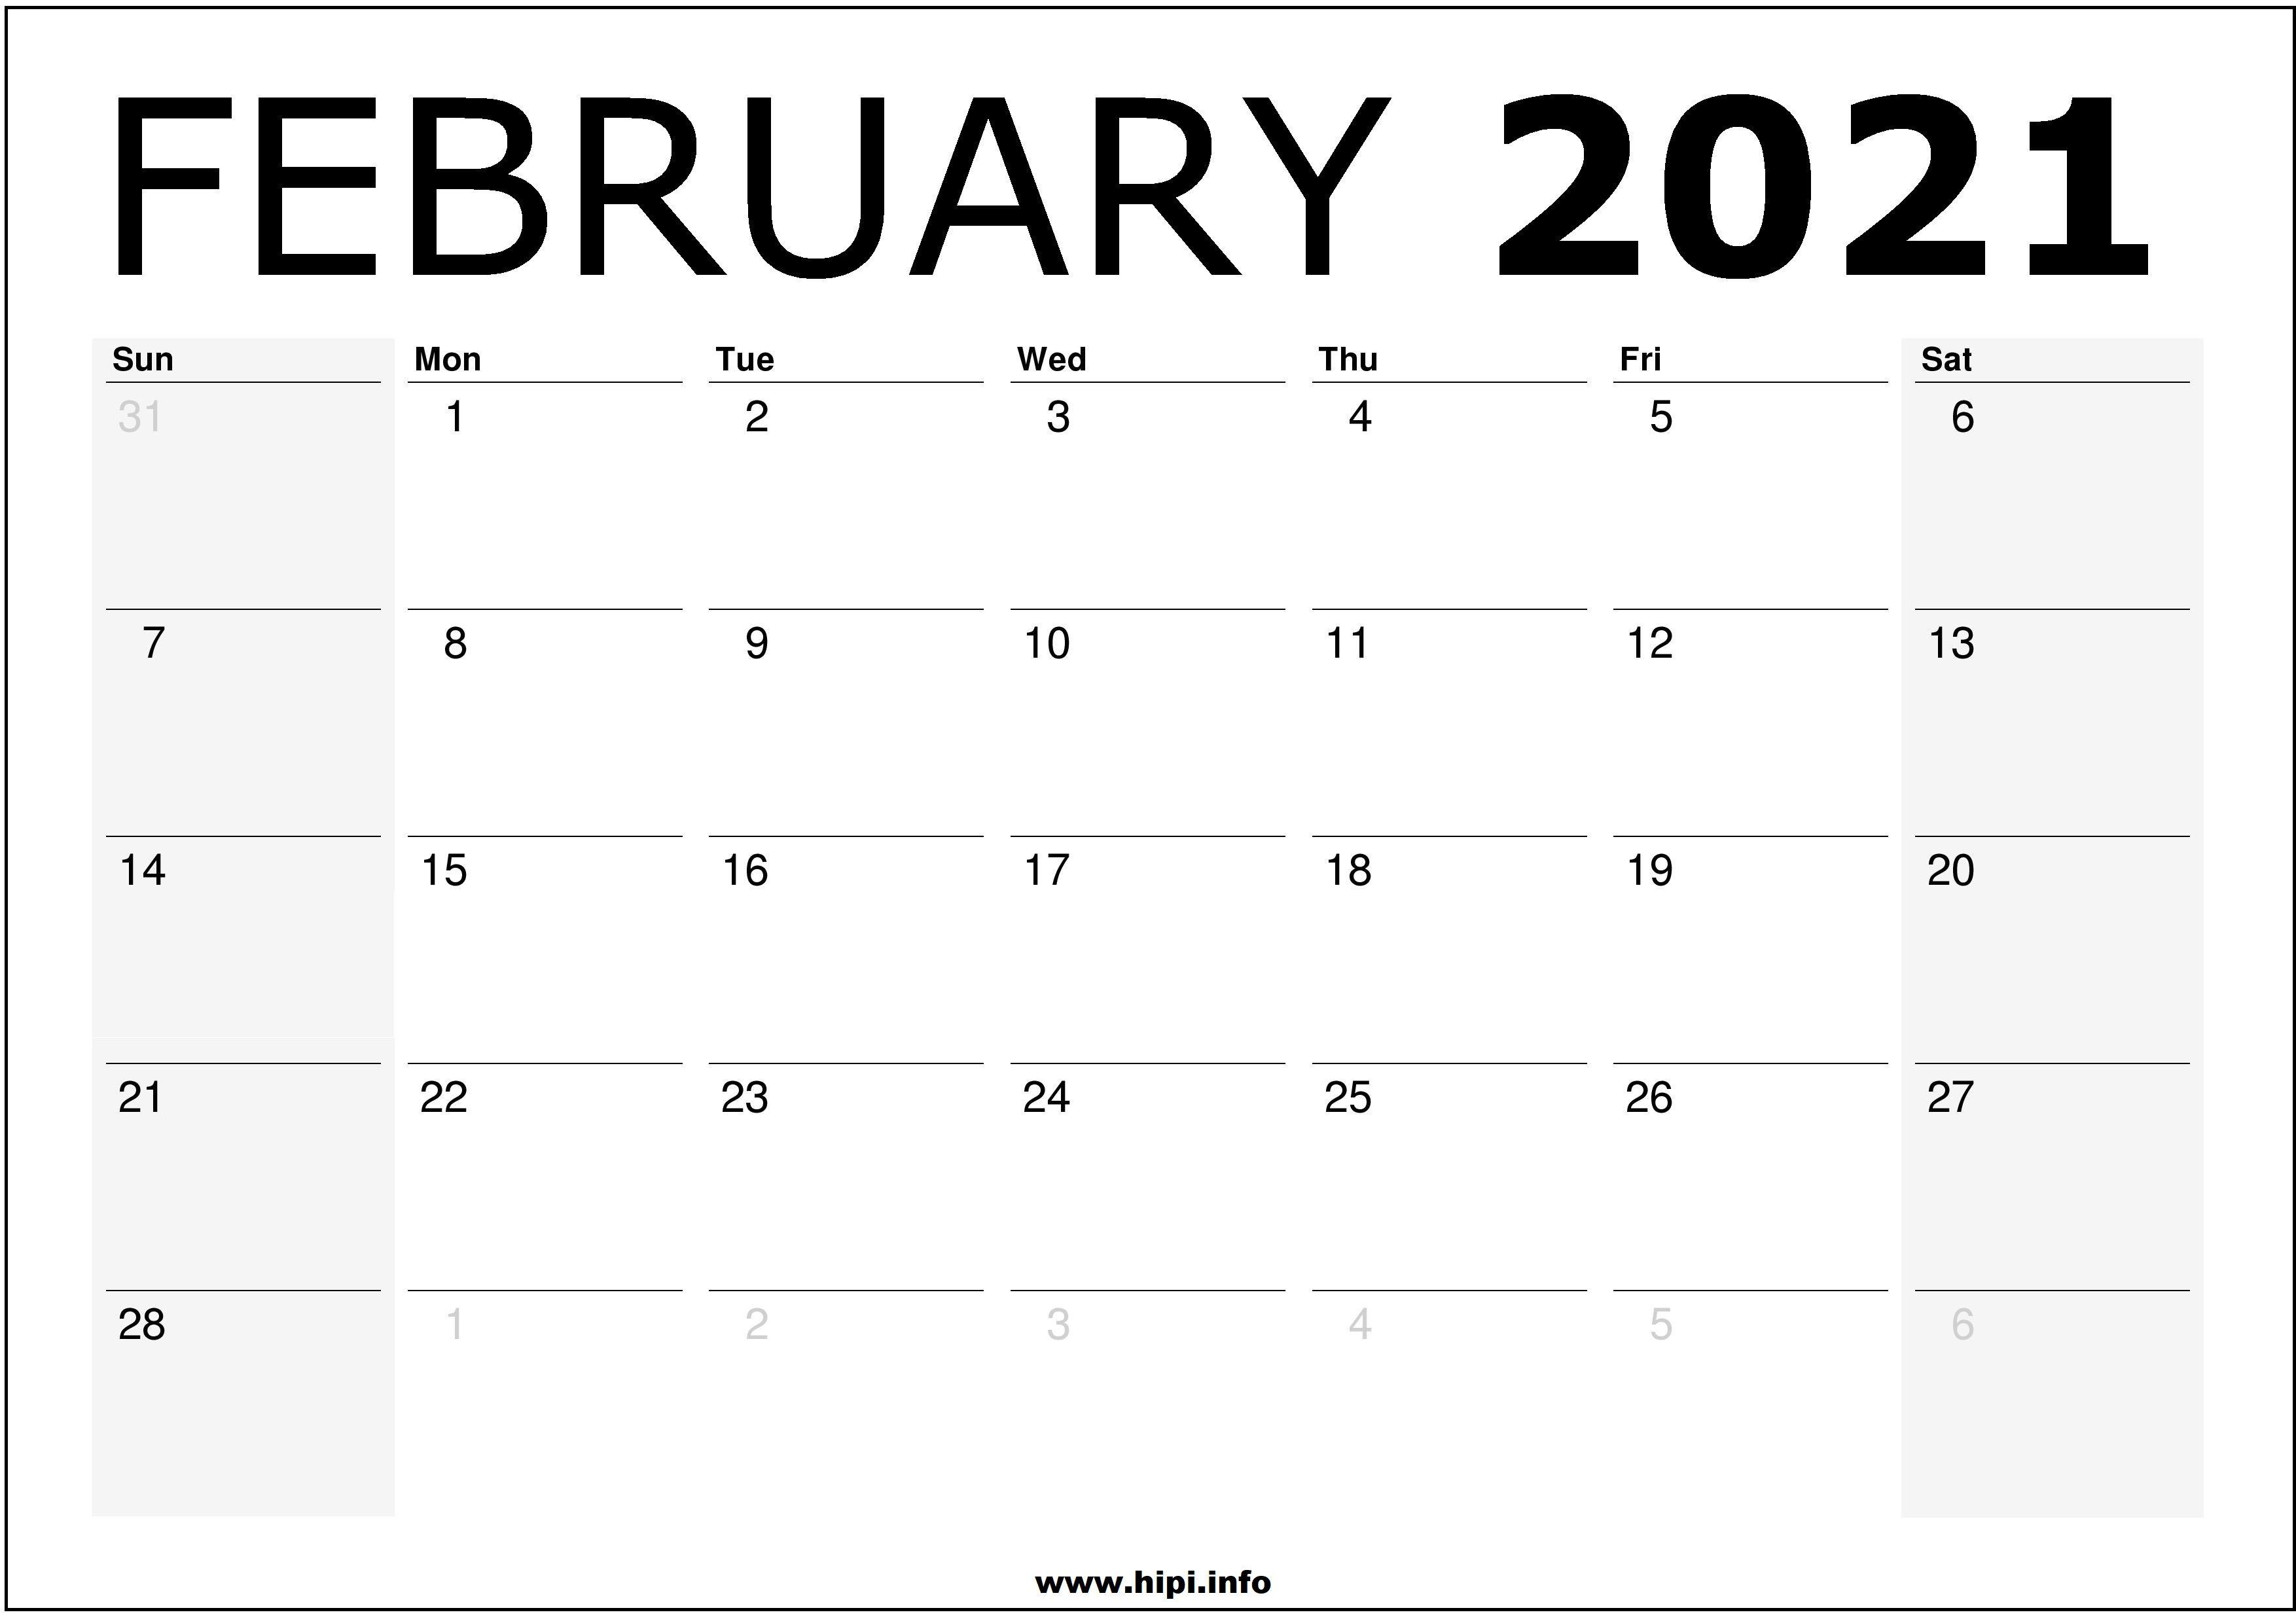 February 2021 Calendar Wallpapers Top Free February 2021 Calendar Backgrounds Wallpaperaccess